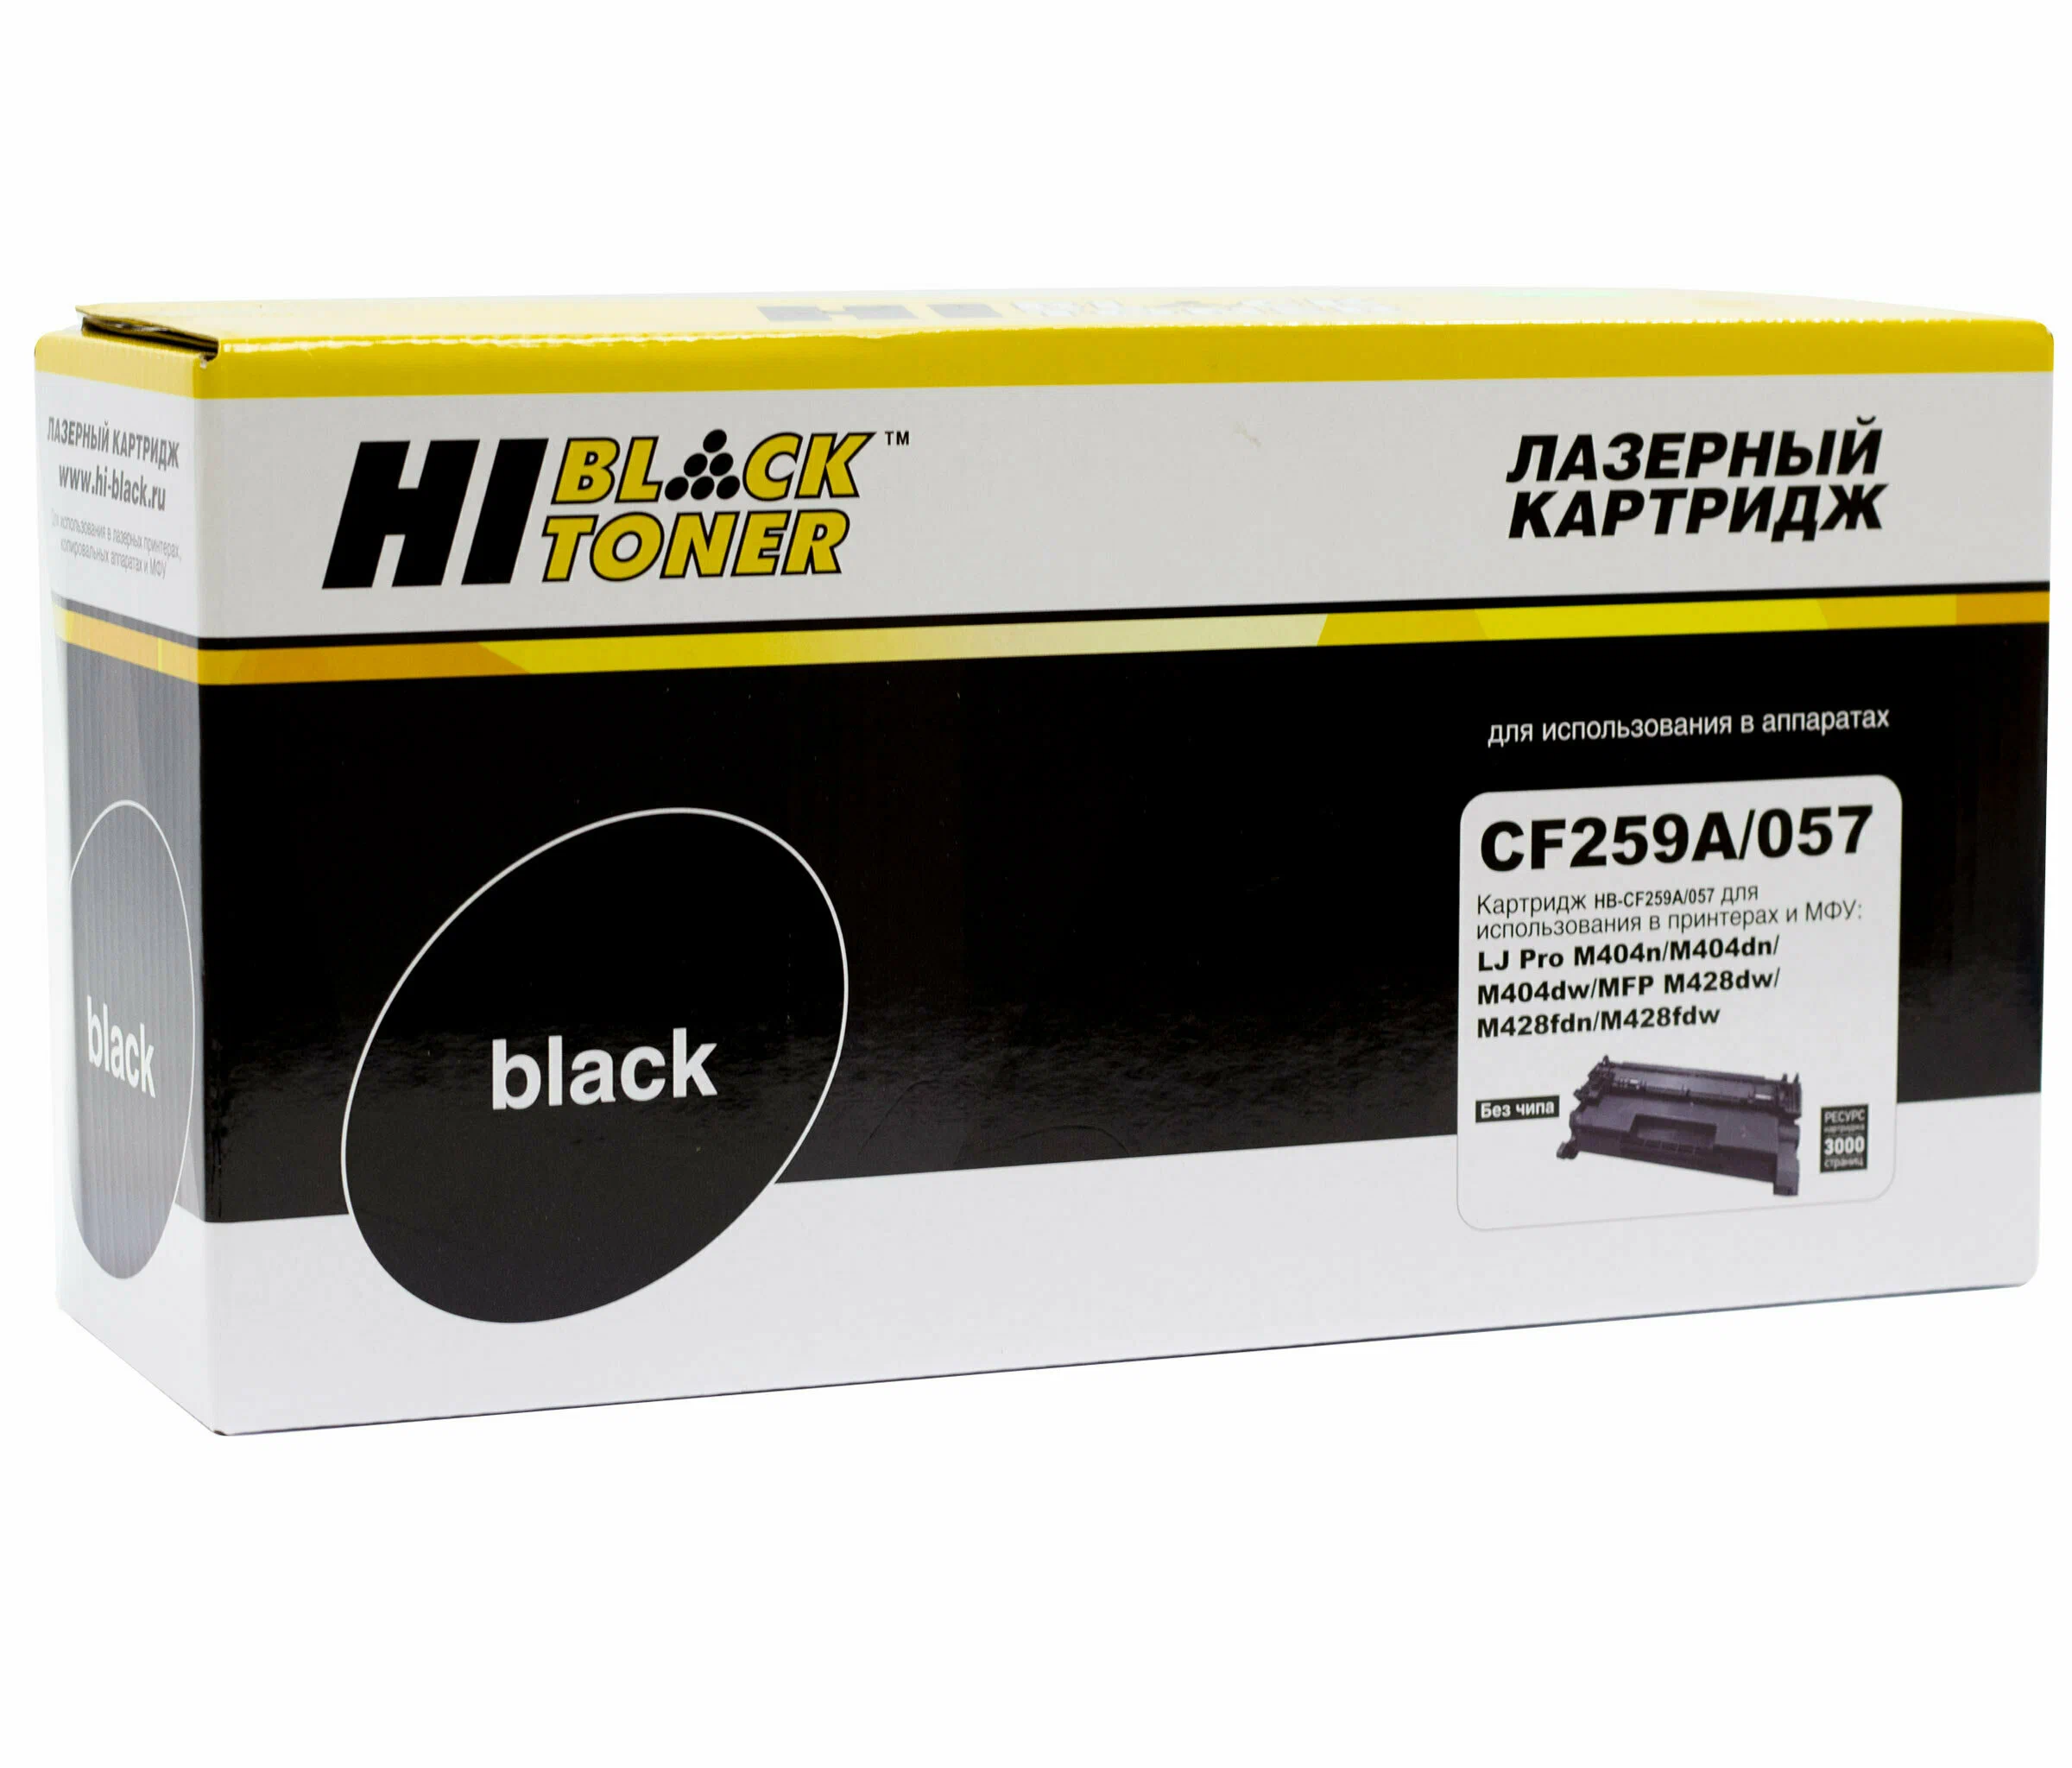 Картридж Hi-Black HB-CF259A совместим с HP LaserJet Pro M304/M404n/dn/dw/MFP M428dw/fdn/fdw, 3K (без чипа)